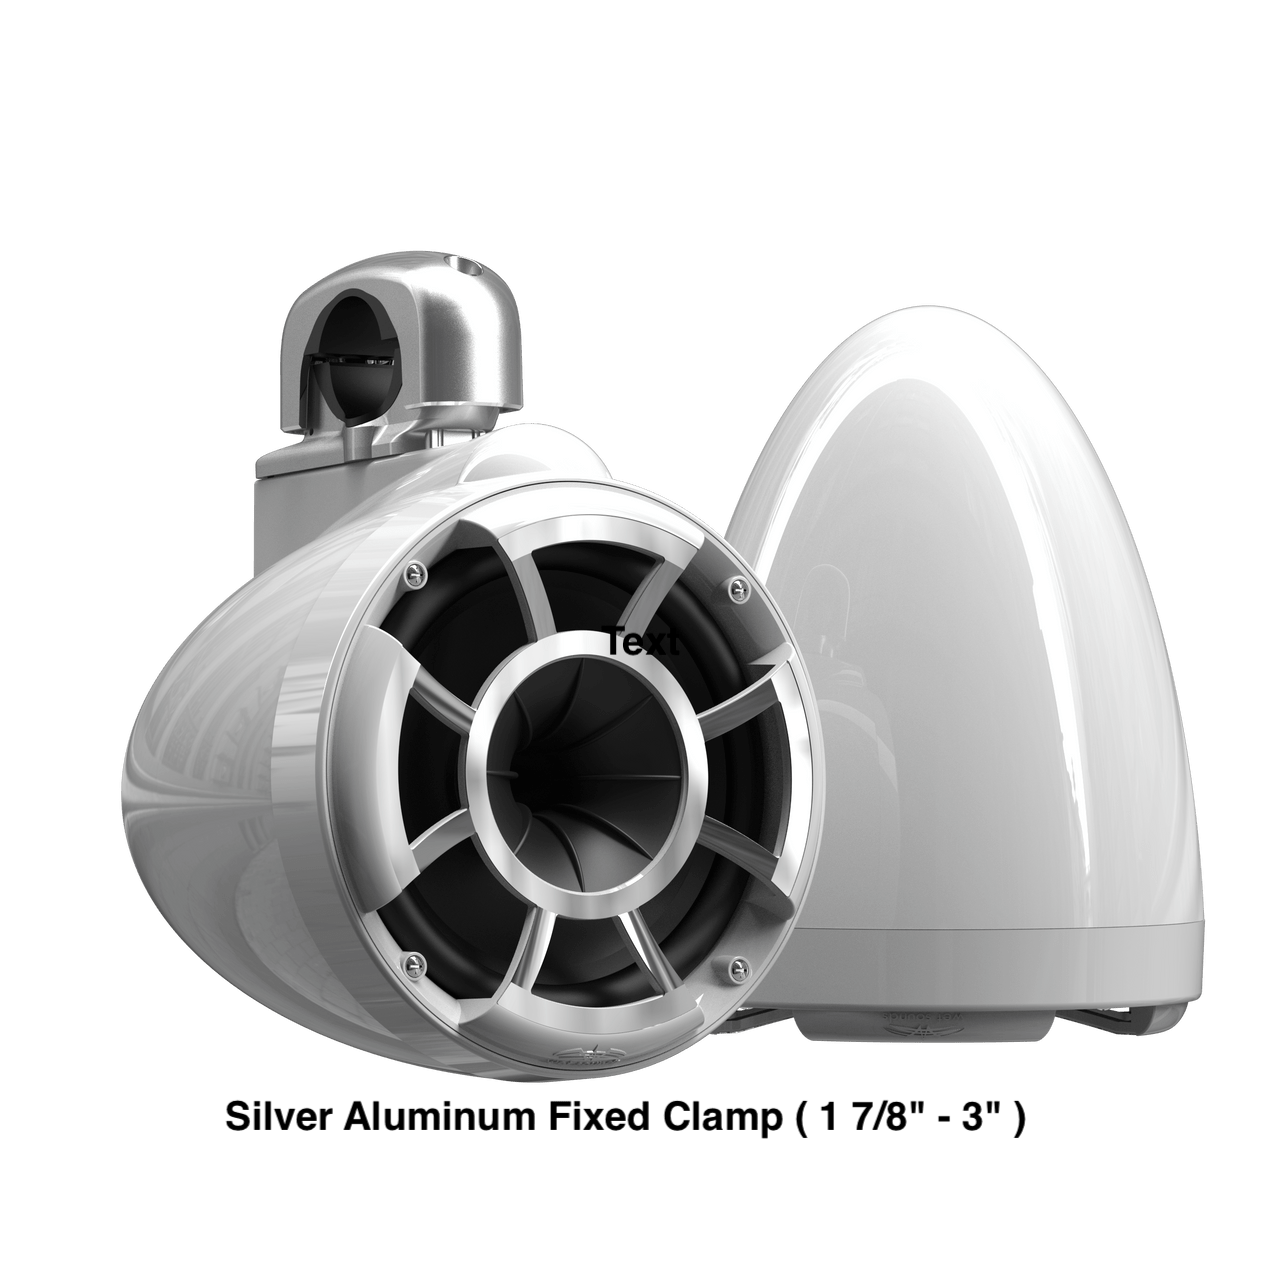 Wet Sounds Boat Wake Tower Speakers Silver Aluminum Fixed Clamp ( 1 7/8" - 3" ) Wet Sounds  REV10™ White V2 | Revolution Series 10" White Tower Speakers